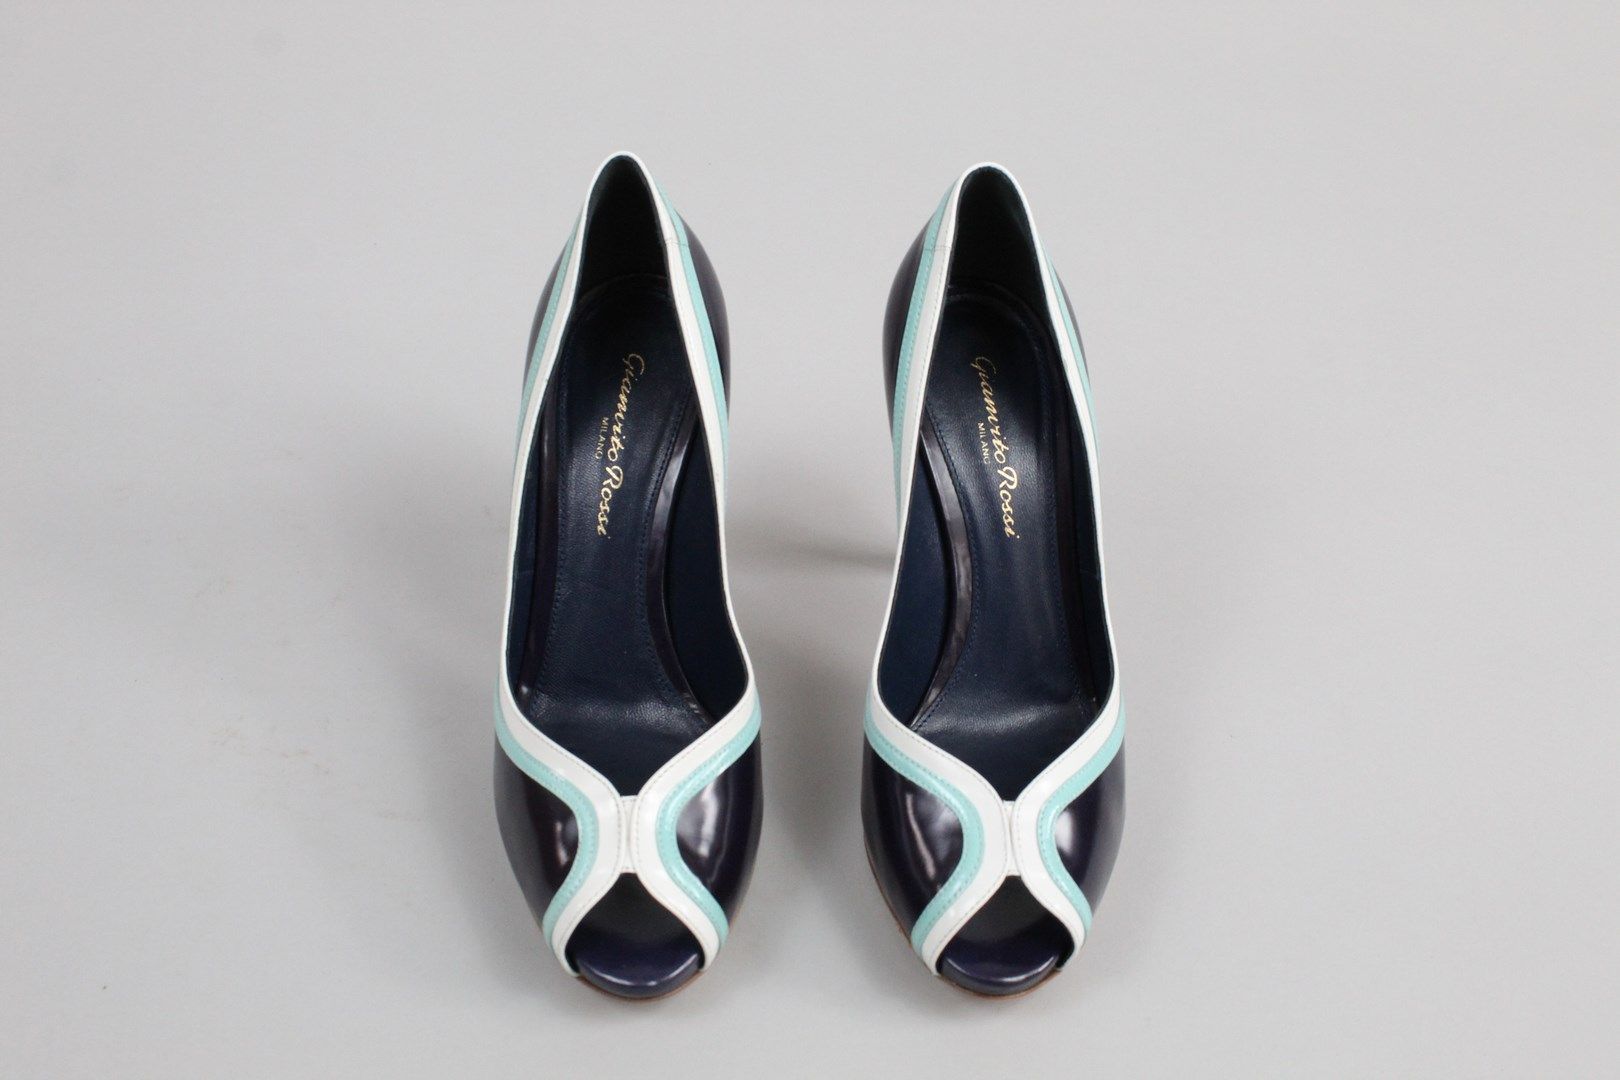 Null 吉安维托-罗西



一双午夜蓝、白色和淡蓝色釉面皮革露趾鞋。

鞋子上的几何图案。



尺寸：36



鞋跟高度：9厘米



带盒